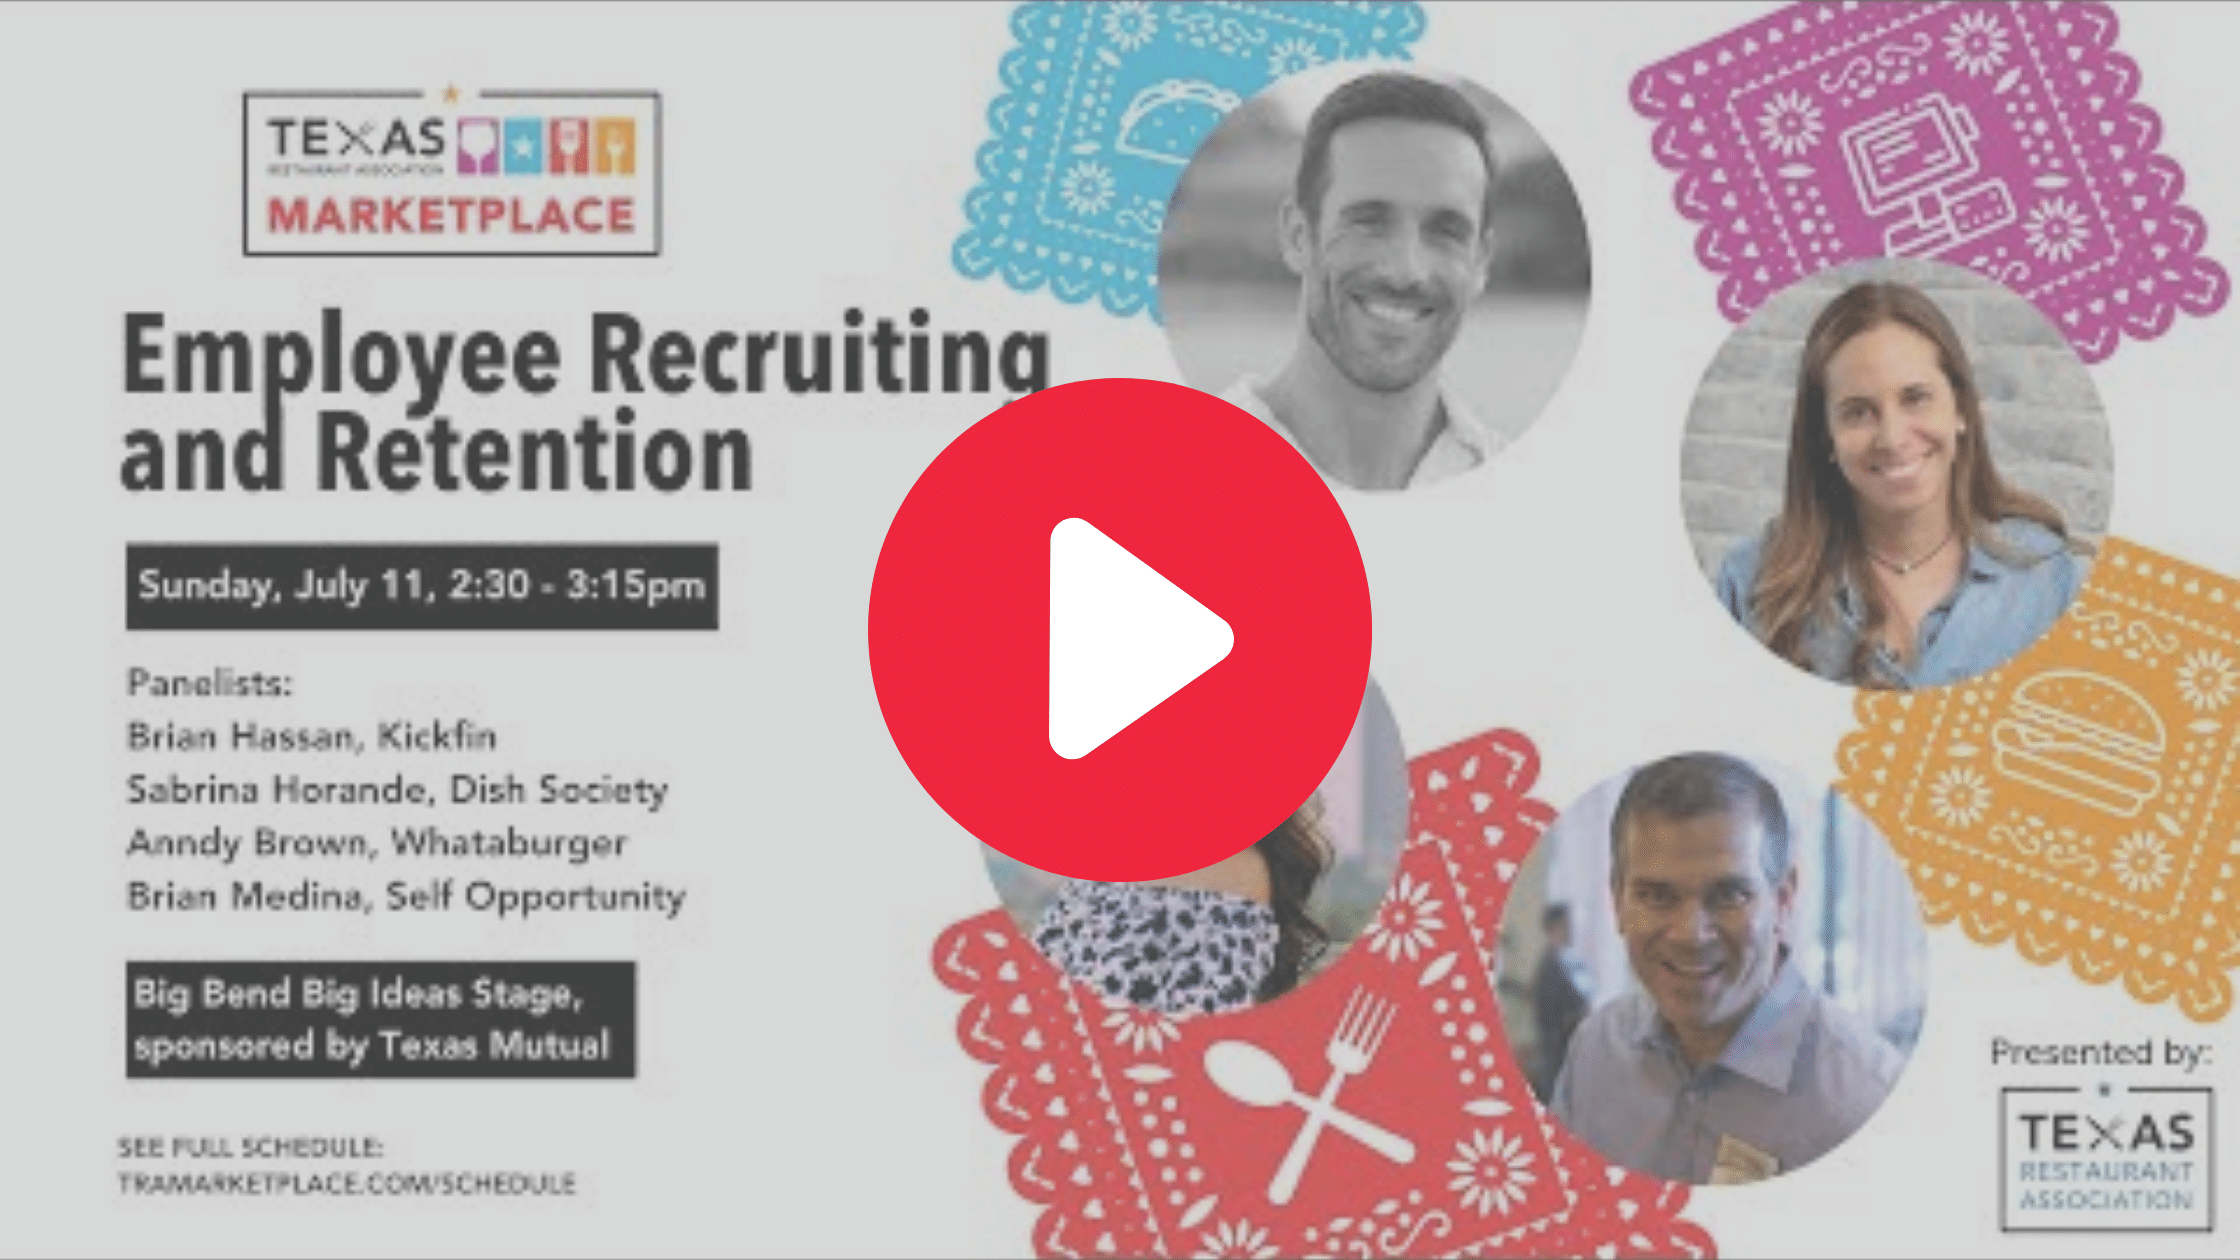 [Video] Whataburger, Dish Society and Kickfin Talk Employee Recruiting